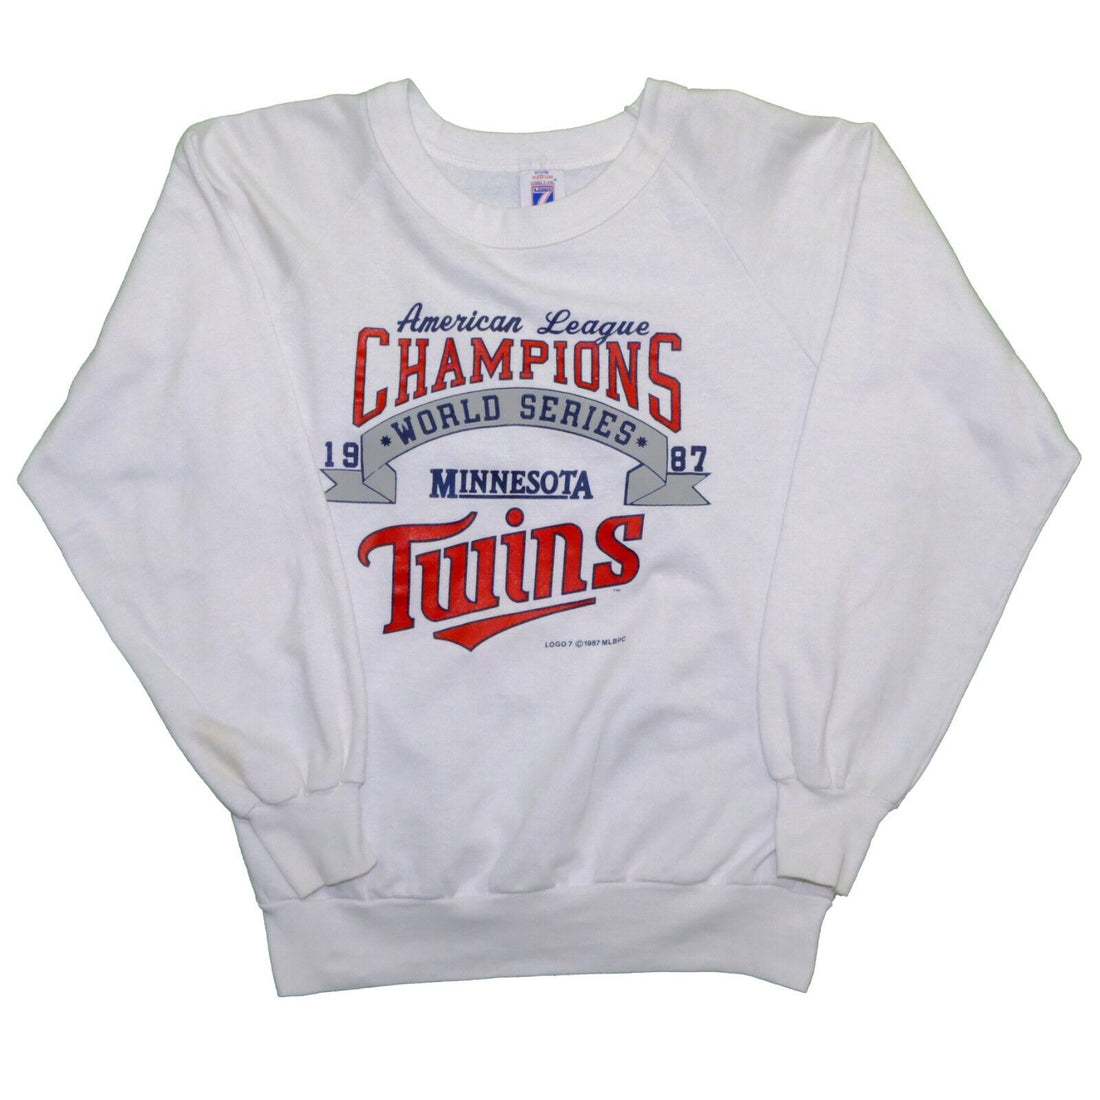 Vintage Minnesota Twins World Series Champs Sweatshirt Size Medium 1987 80s MLB